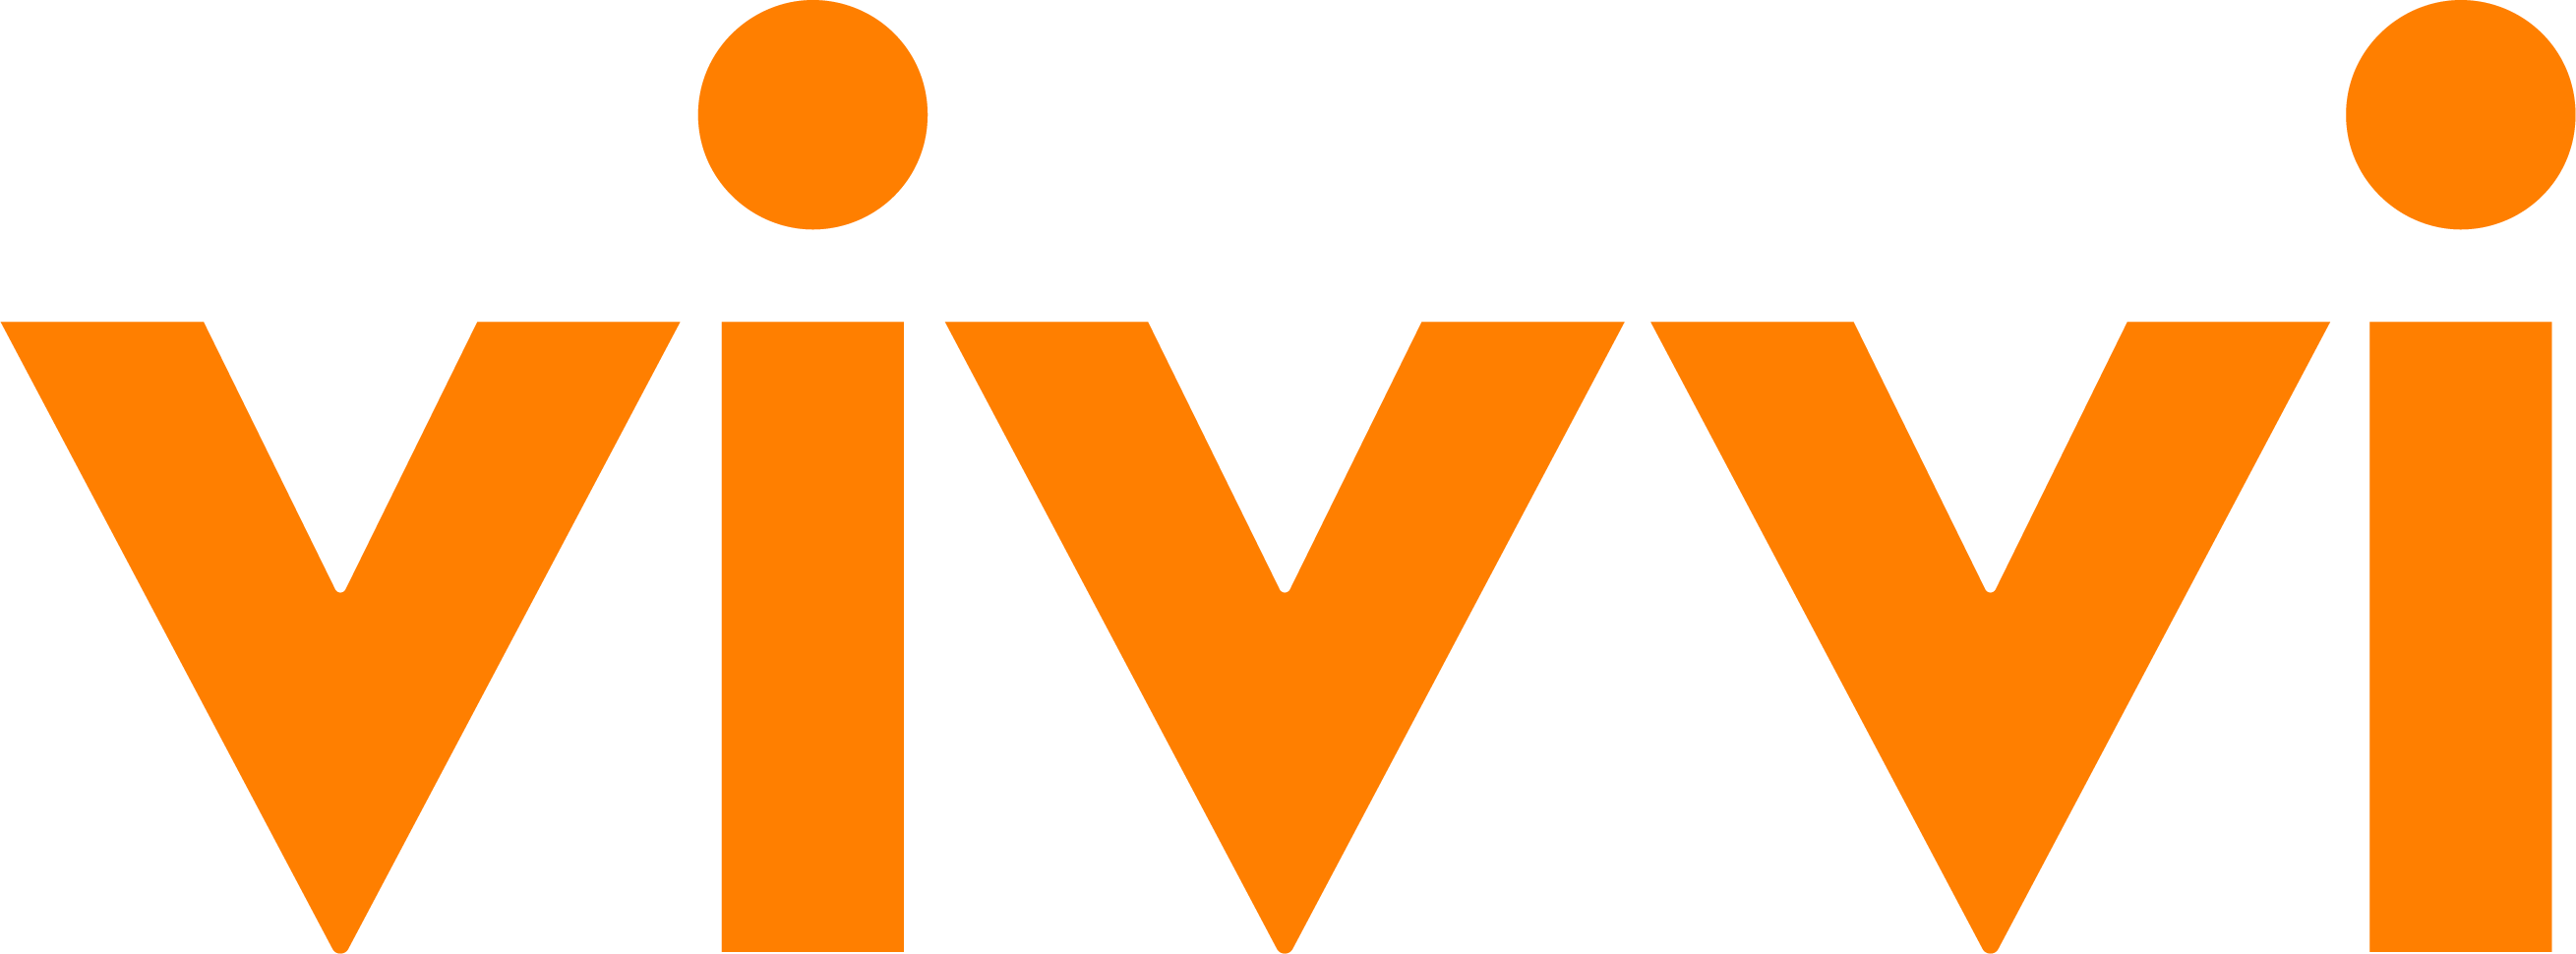 Vivvi - Standalone Webcast 1 of 1